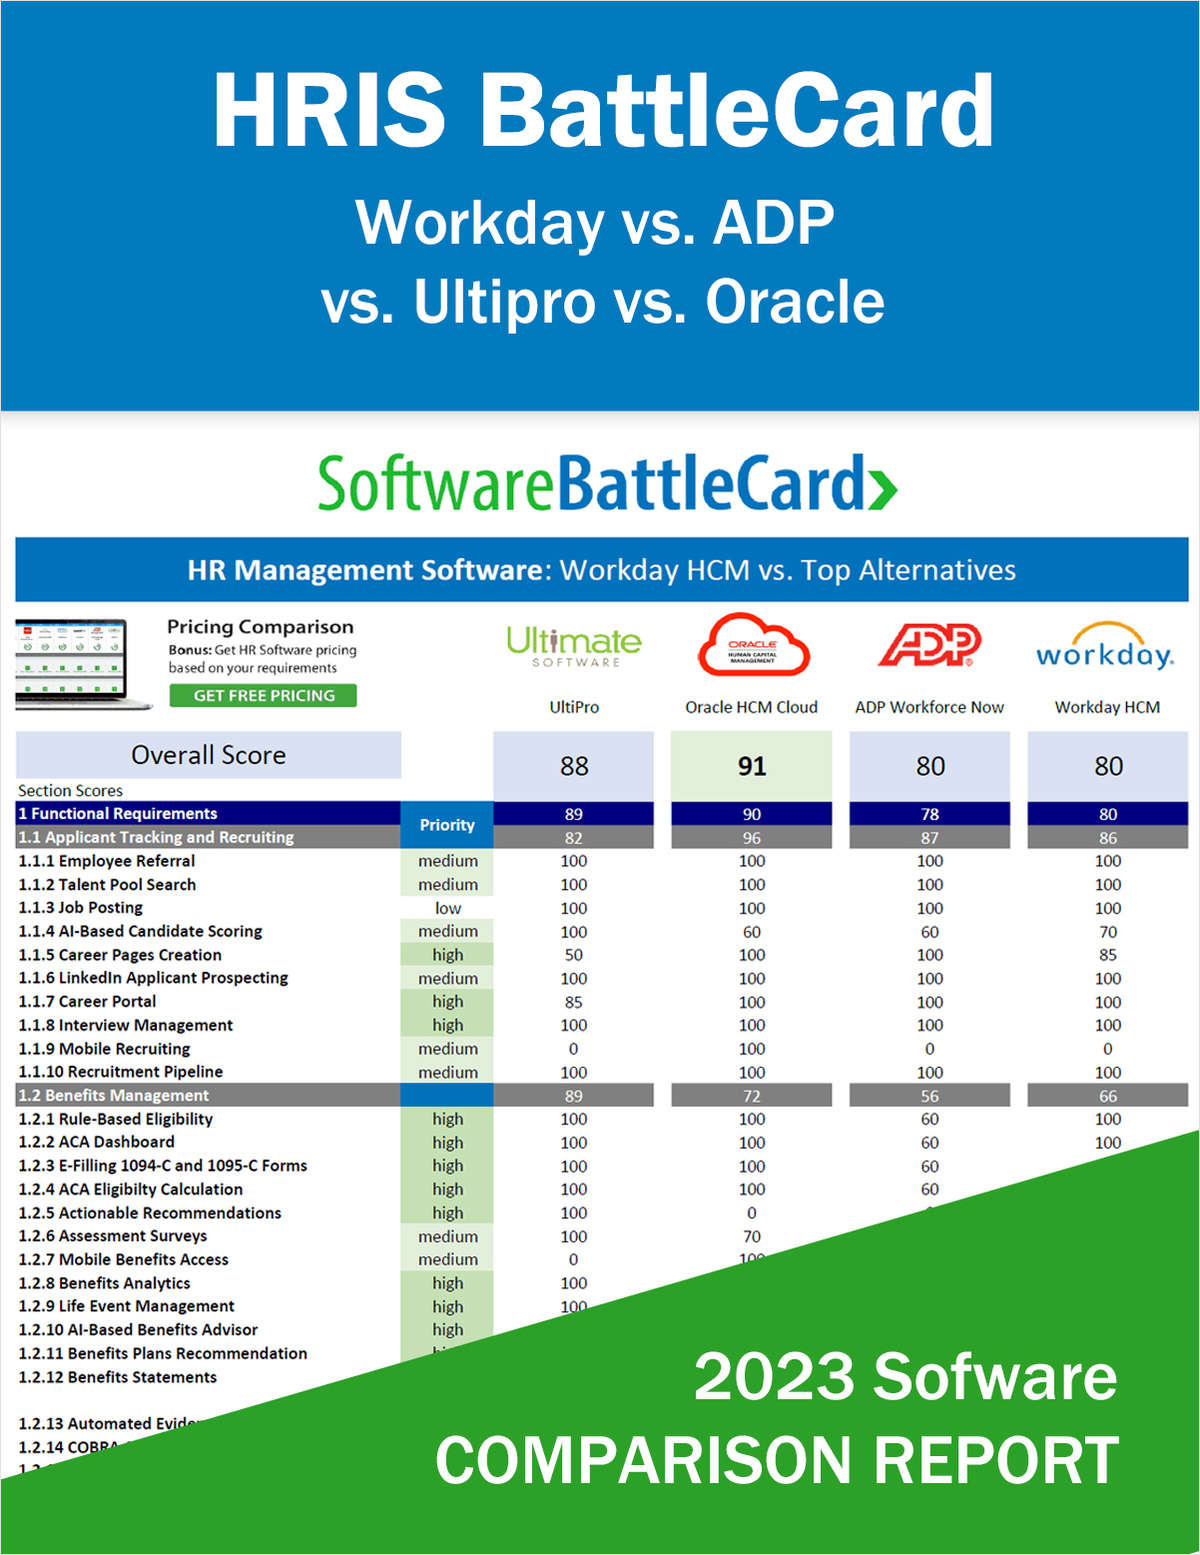 HRIS Systems BattleCard--Workday HCM vs. ADP Workforce Now vs. Ultipro vs. Oracle HCM Cloud